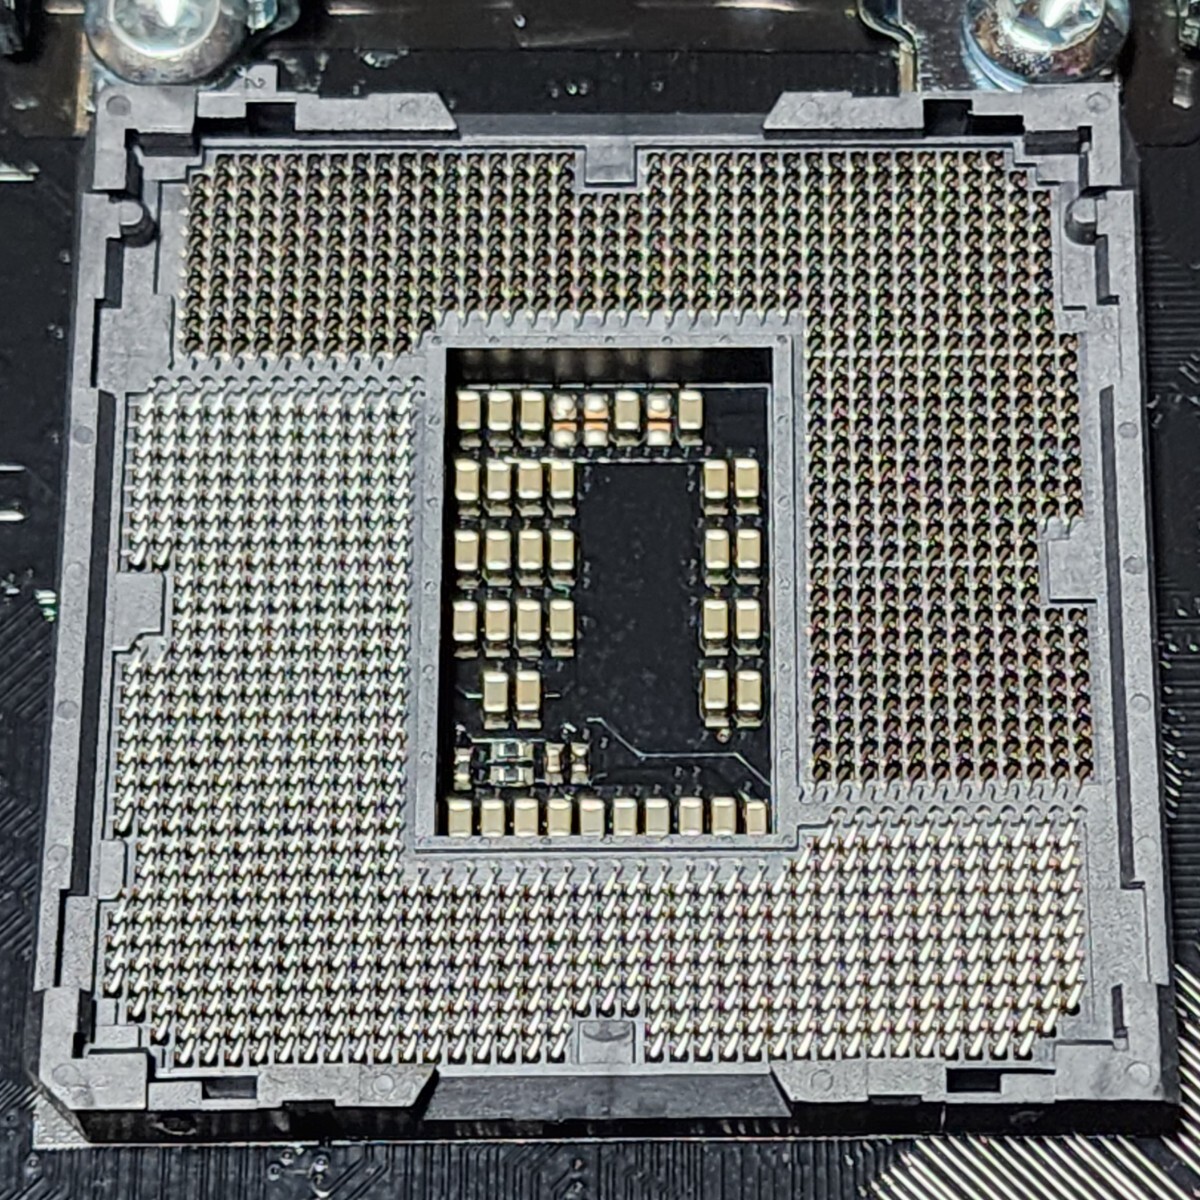 ASRock Z390M Pro4 IOパネル付属 LGA1151 MicroATXマザーボード 第8・9世代CPU対応 最新Bios 動作確認済 PCパーツ (2)